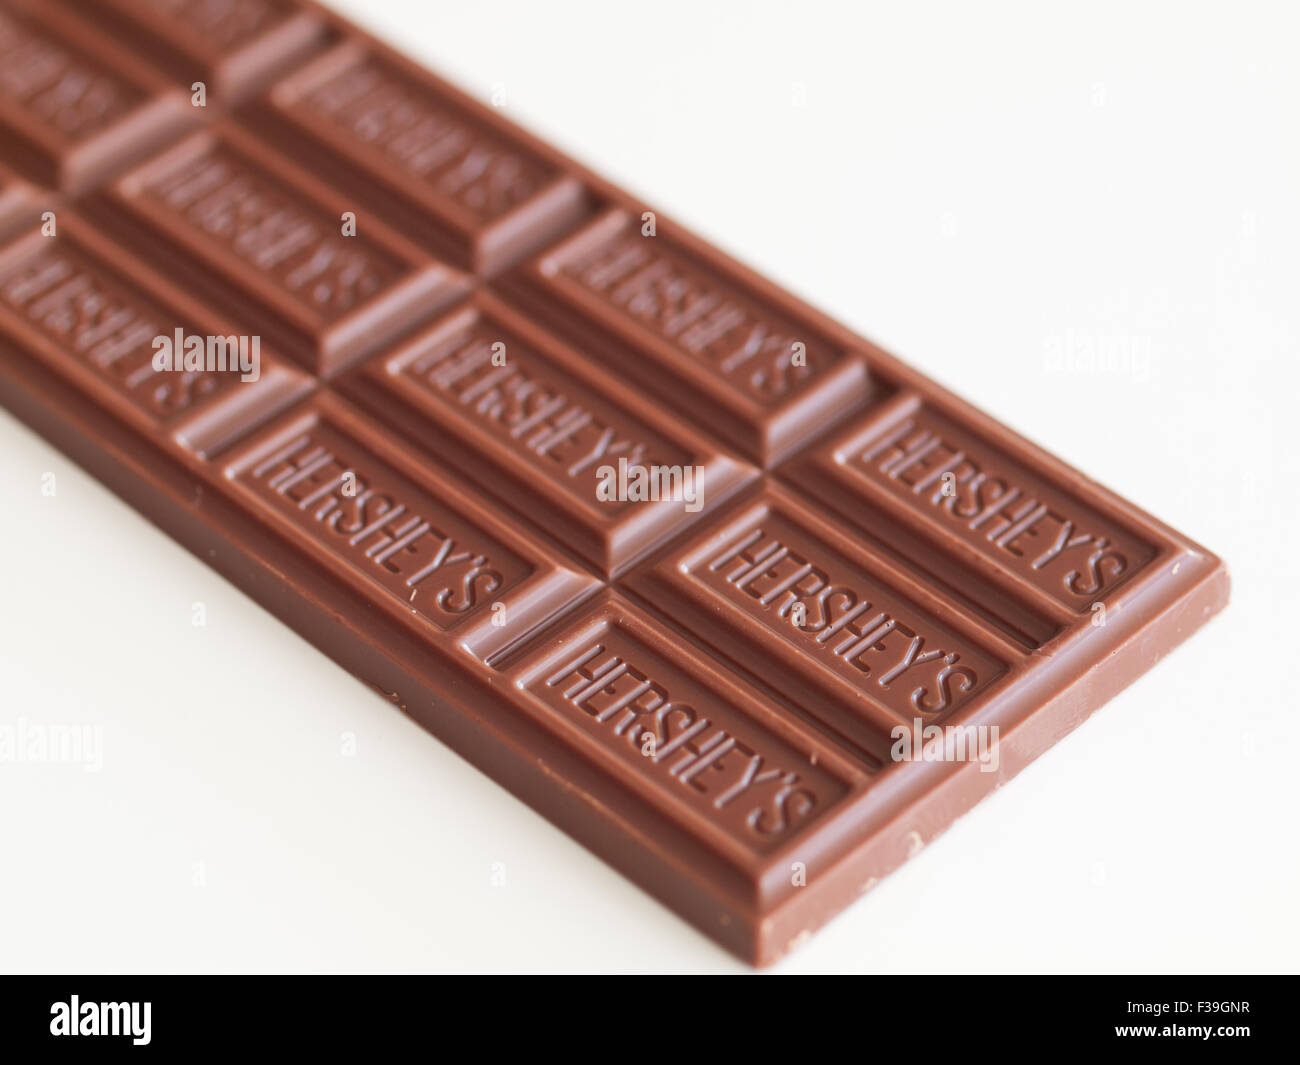 A Hershey's milk chocolate bar. Stock Photo